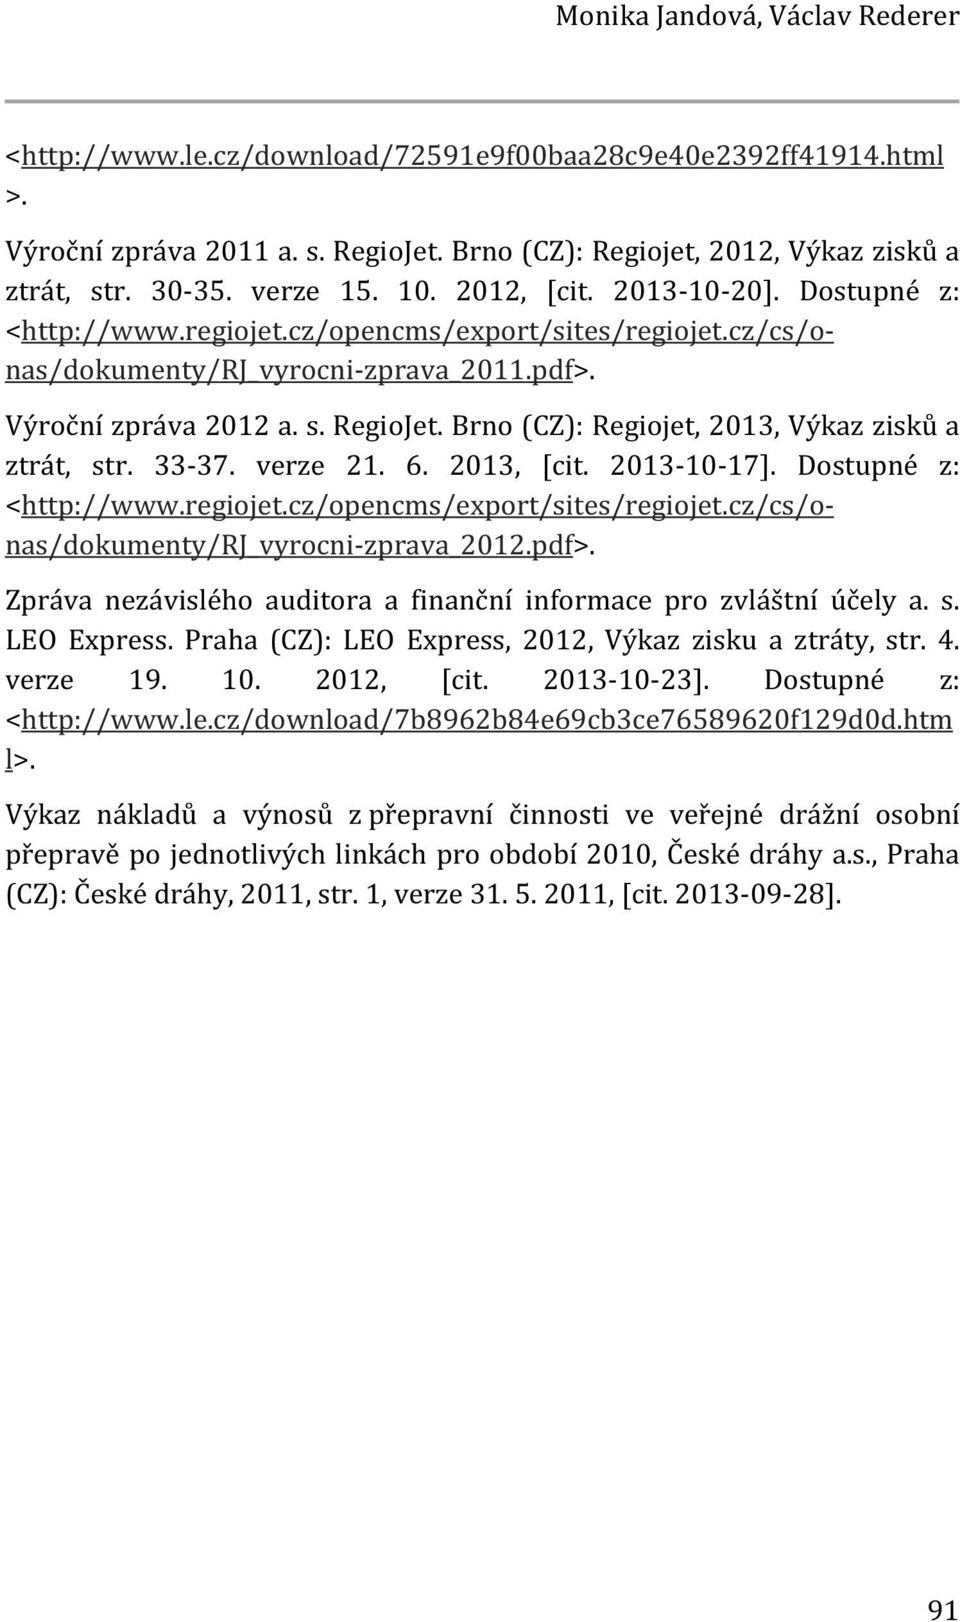 Brno (CZ): Regiojet, 2013, Výkaz zisků a ztrát, str. 33-37. verze 21. 6. 2013, [cit. 2013-10-17]. Dostupné z: <http://www.regiojet.cz/opencms/export/sites/regiojet.